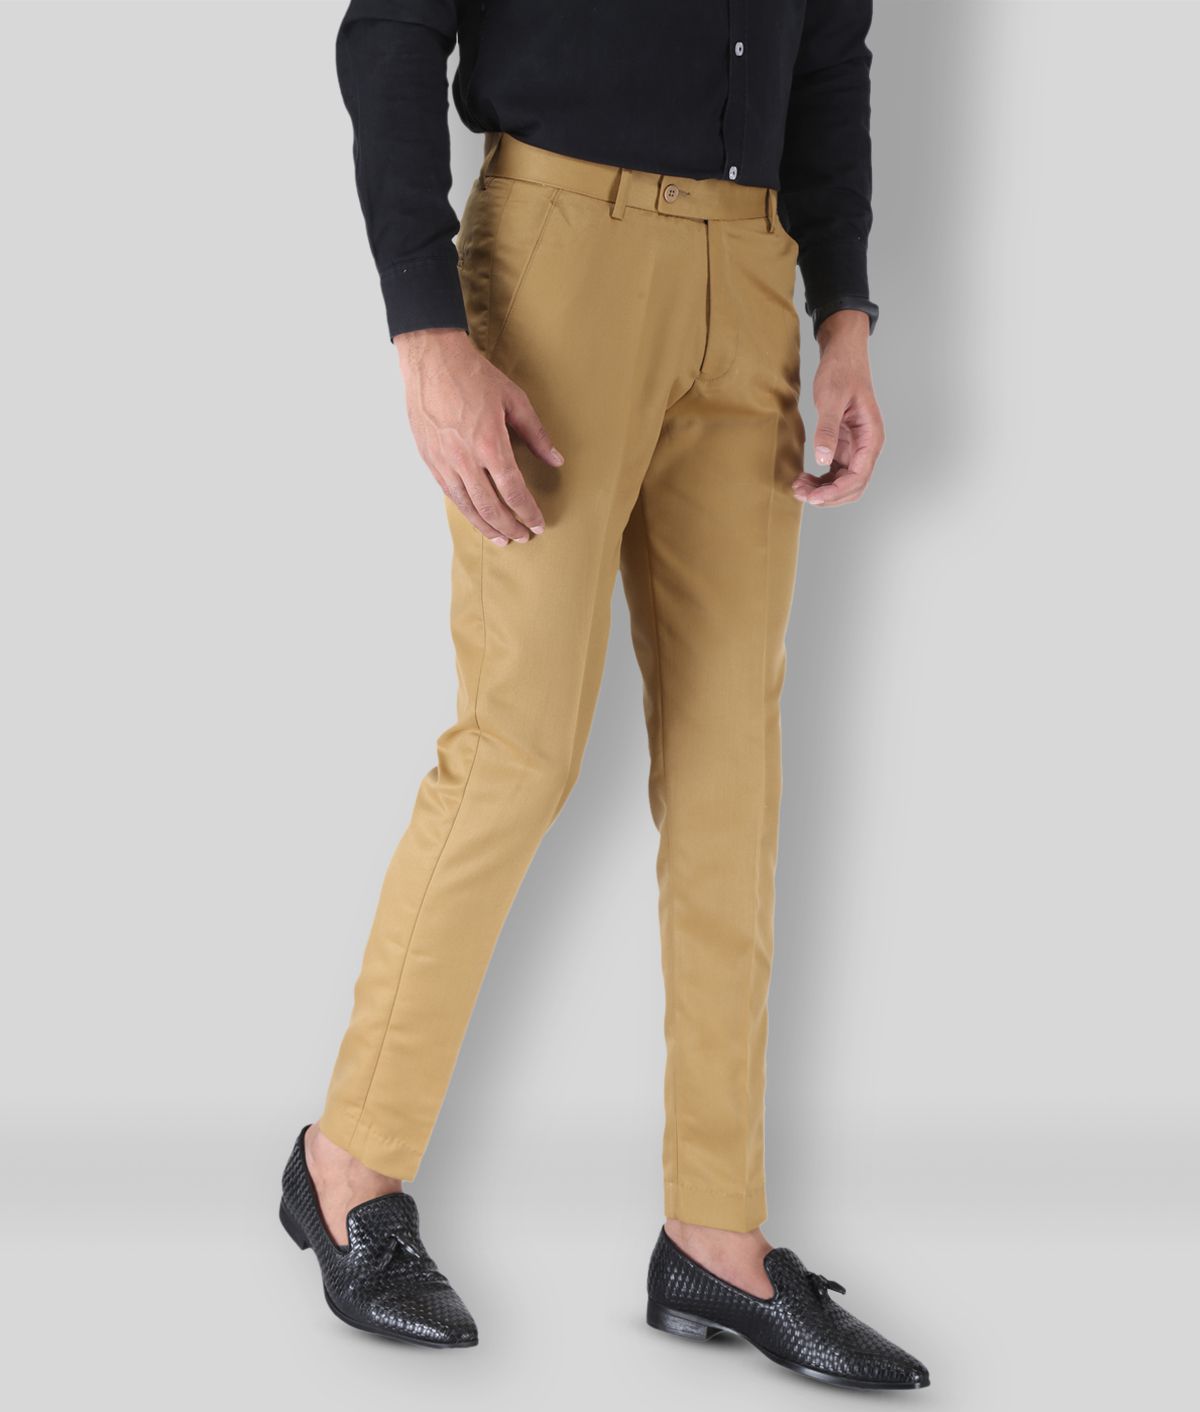 SREY - Khaki Cotton Blend Slim Fit Men's Formal Pants (Pack of 2)